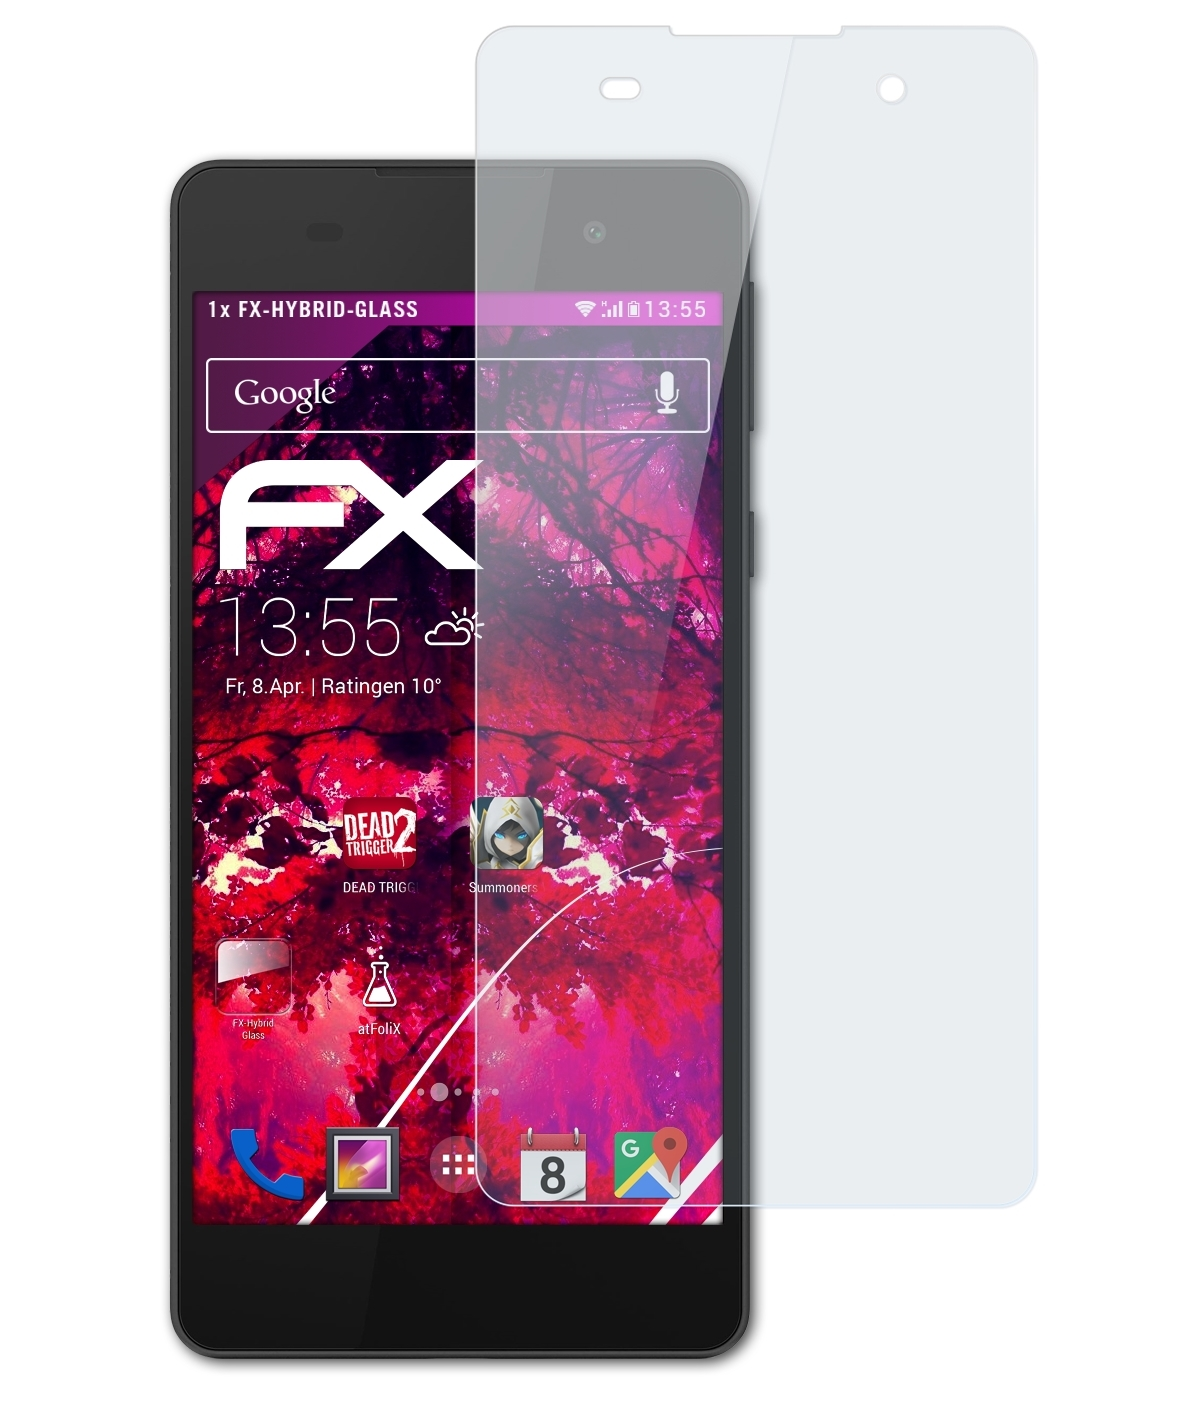 Xperia FX-Hybrid-Glass Sony Schutzglas(für E5) ATFOLIX